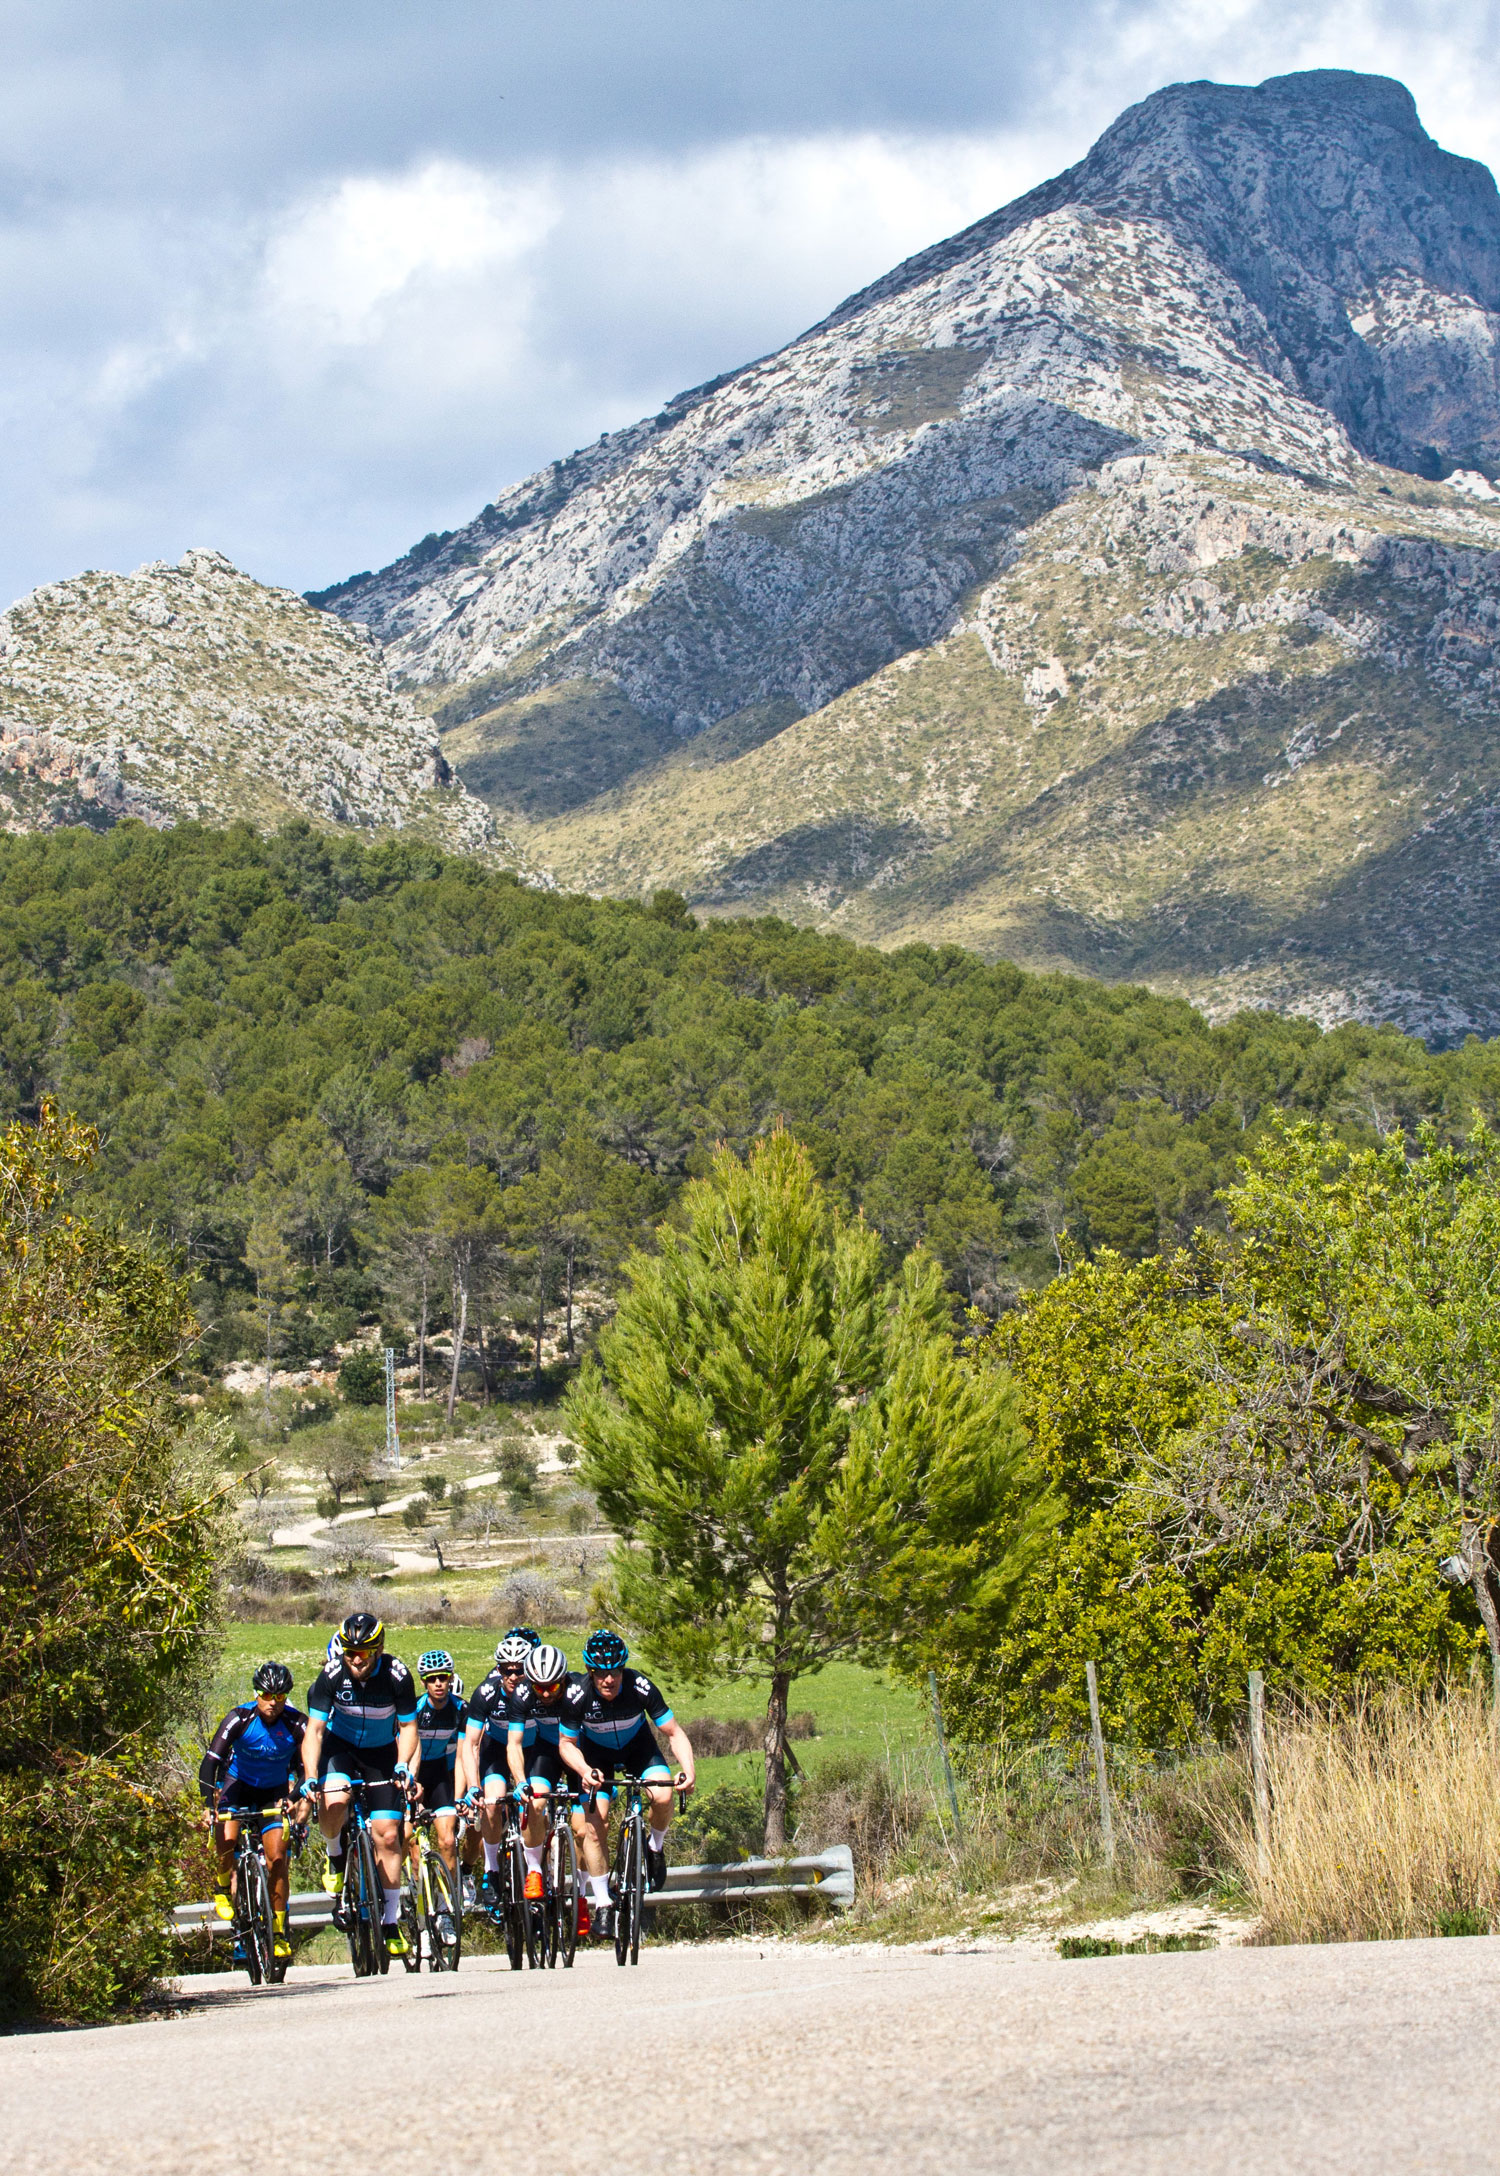 Mallorca gilt als ein Eldorado für Radfahrer aller Fitnesslevel. Foto:  Ajuntament de Calvia